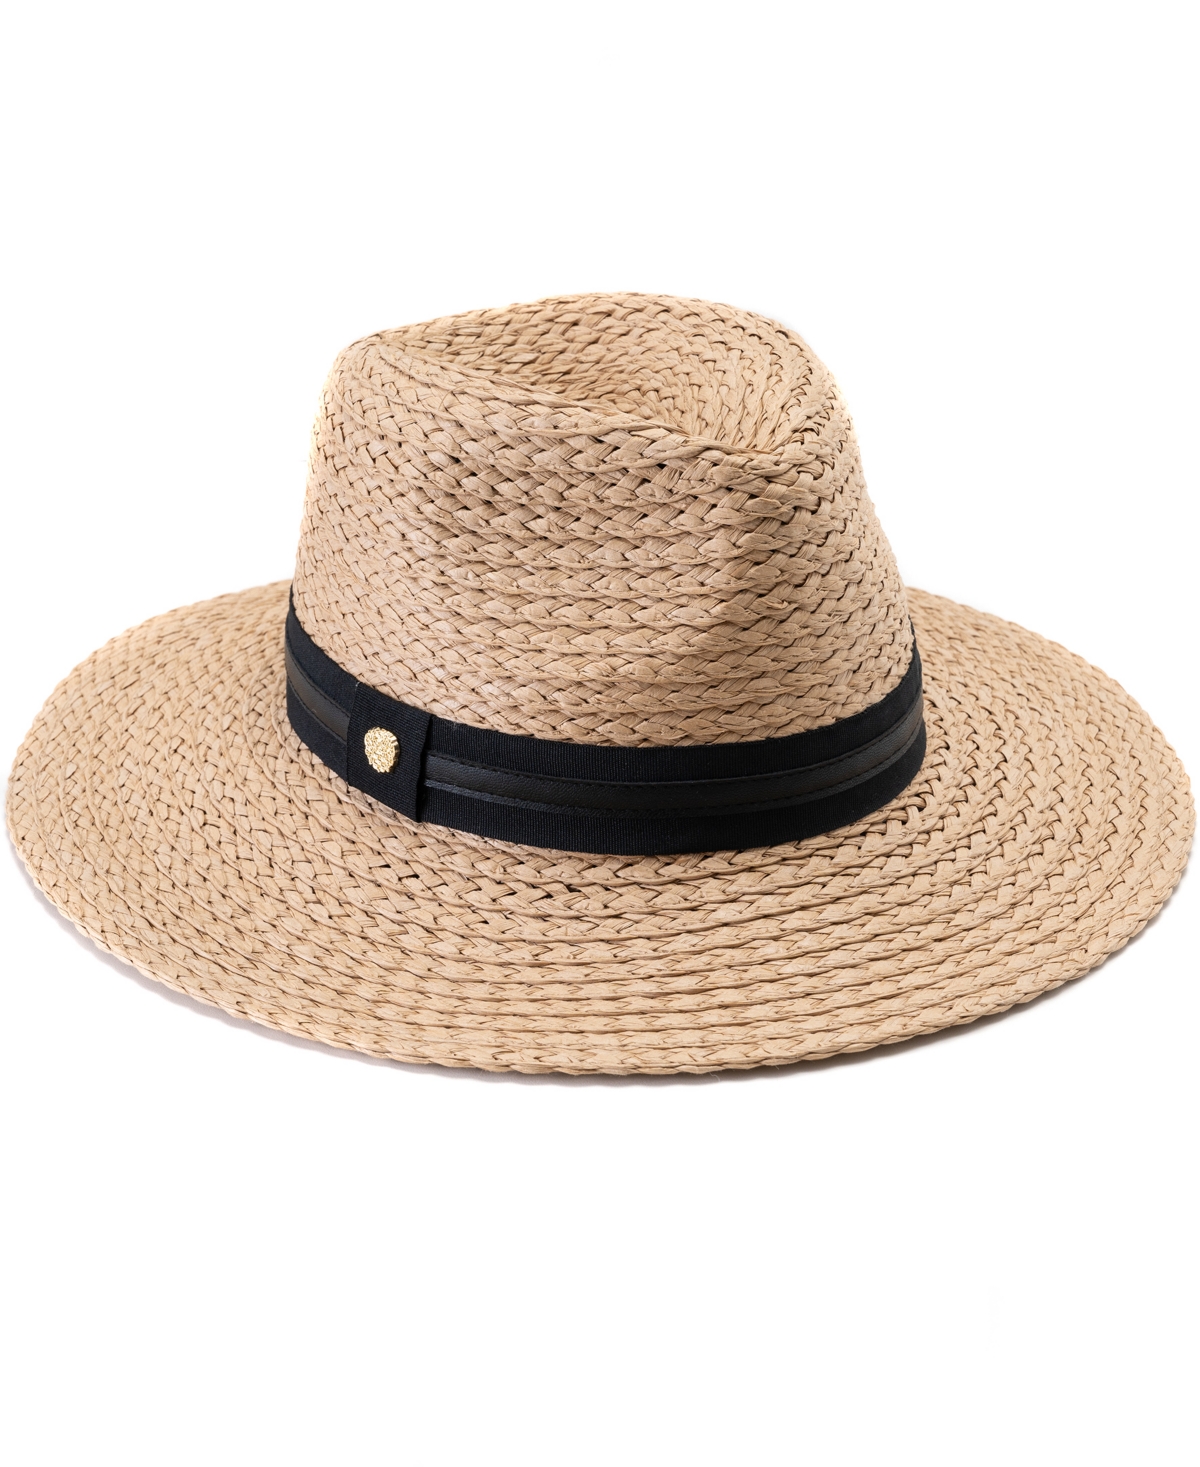 Straw Panama Hat with Ribbon Trim - Tan